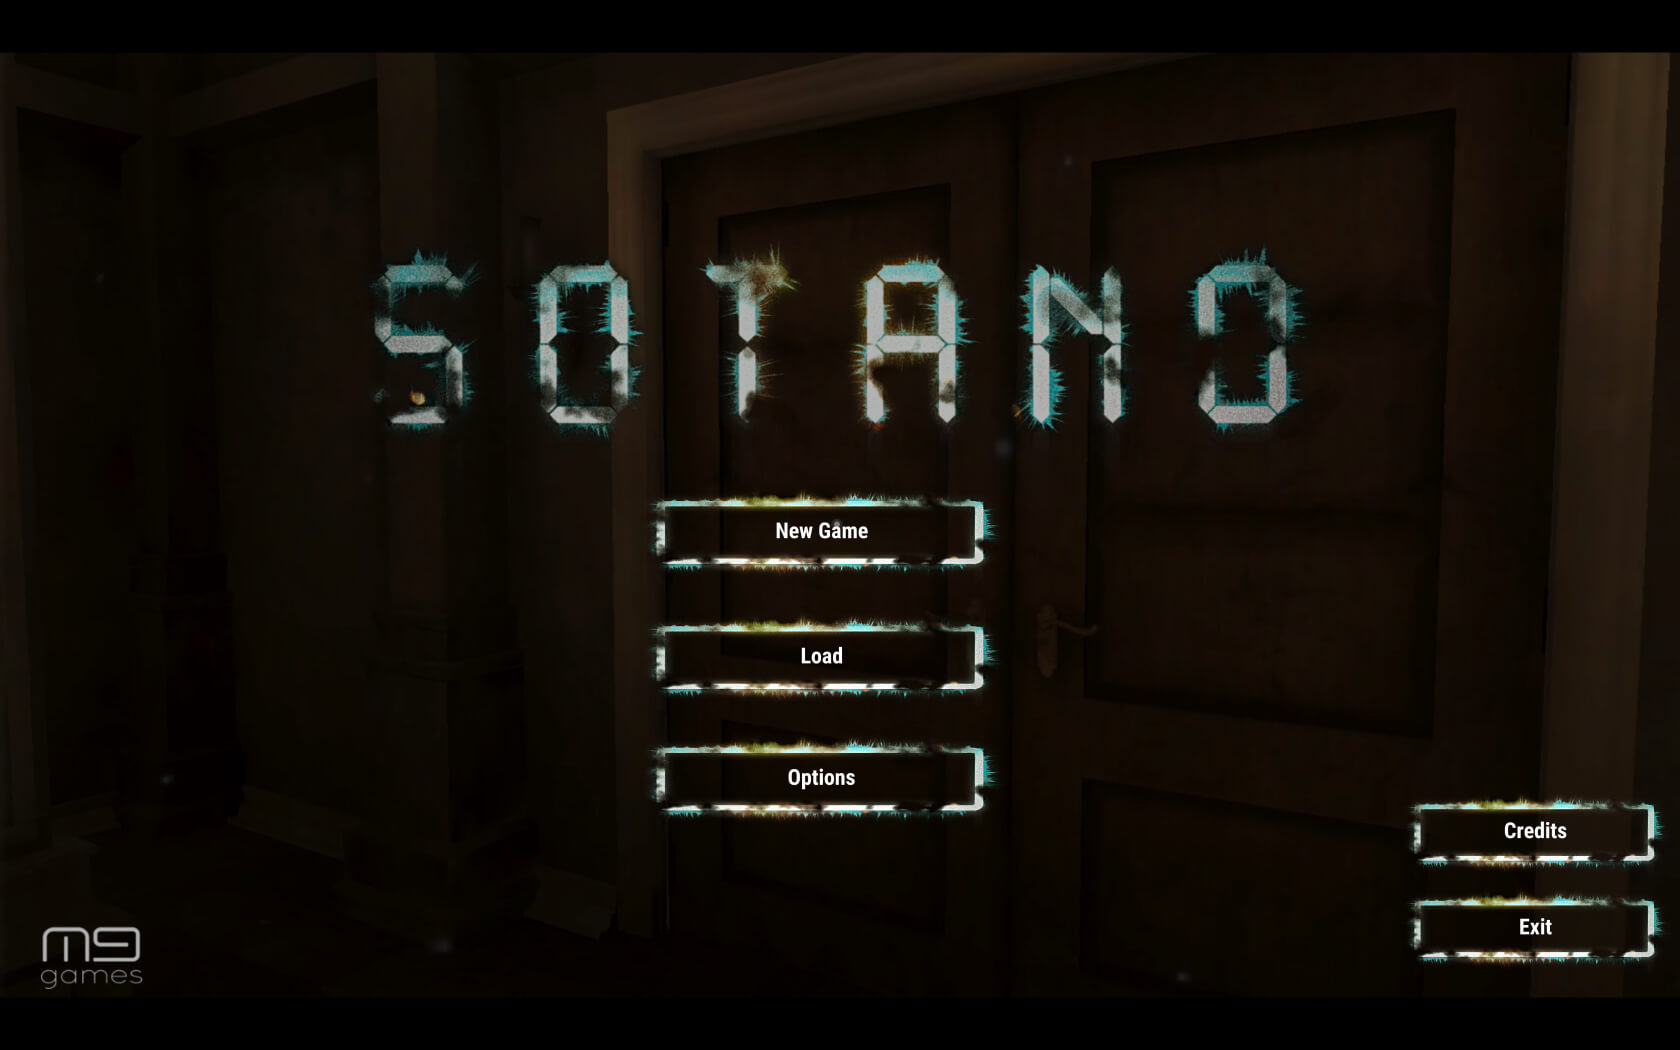 SOTANO密室逃脱冒险 for Mac Sotano – Mystery Escape Room Adventure v1.2 英文原生版